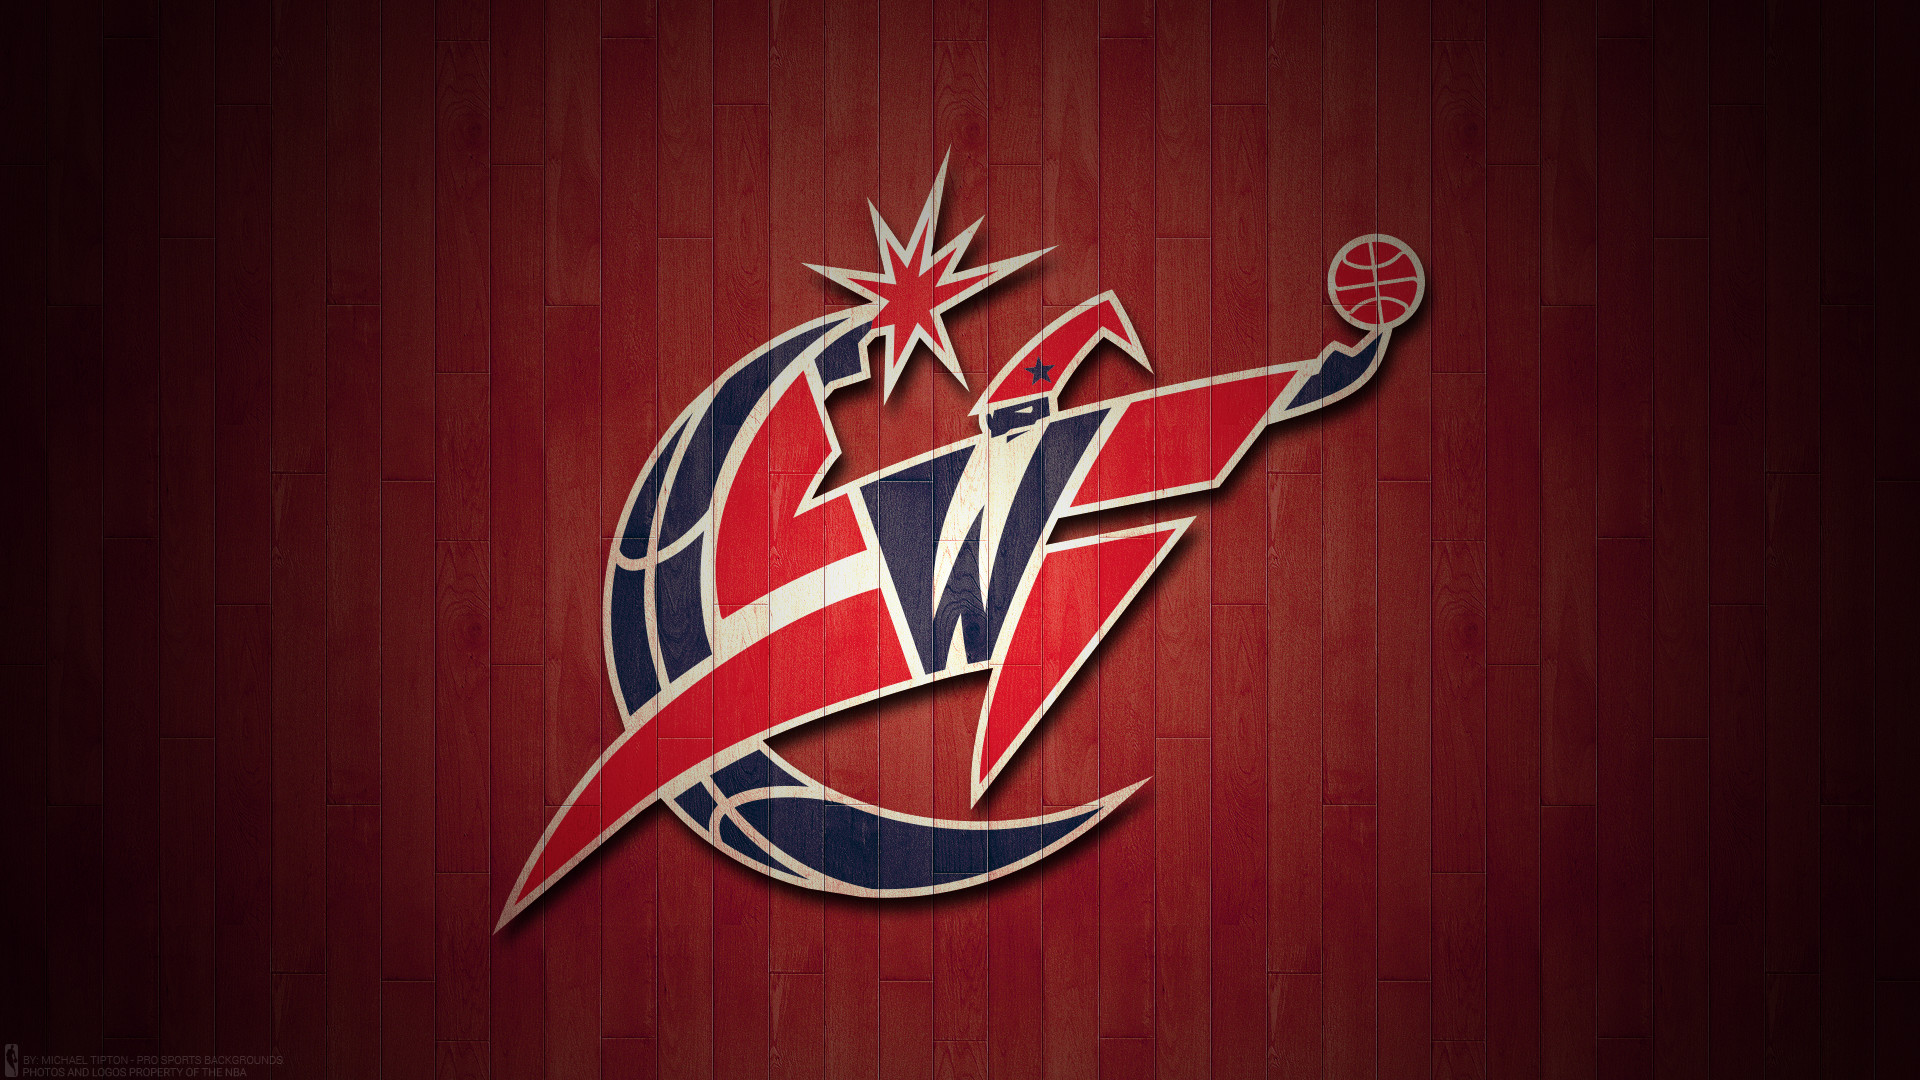 Washington Wizards news